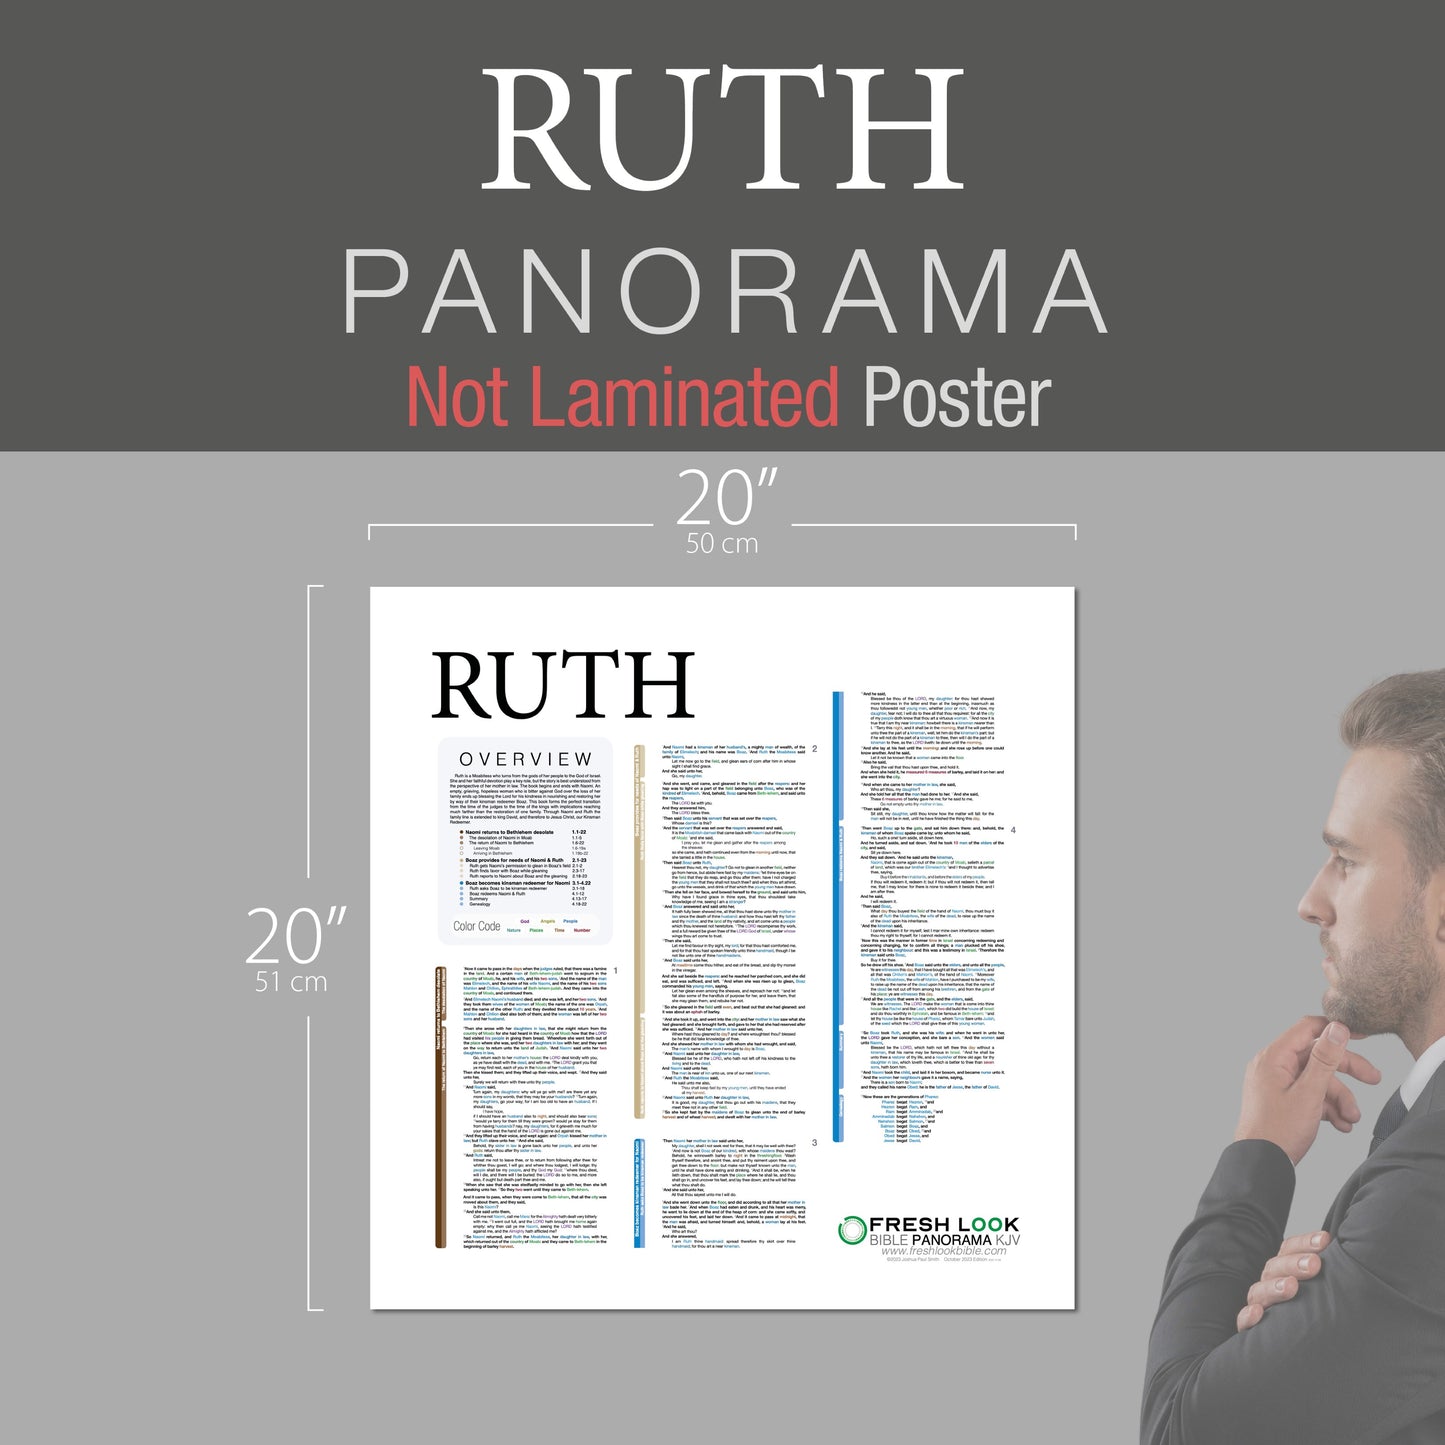 Ruth Panorama Not Laminated